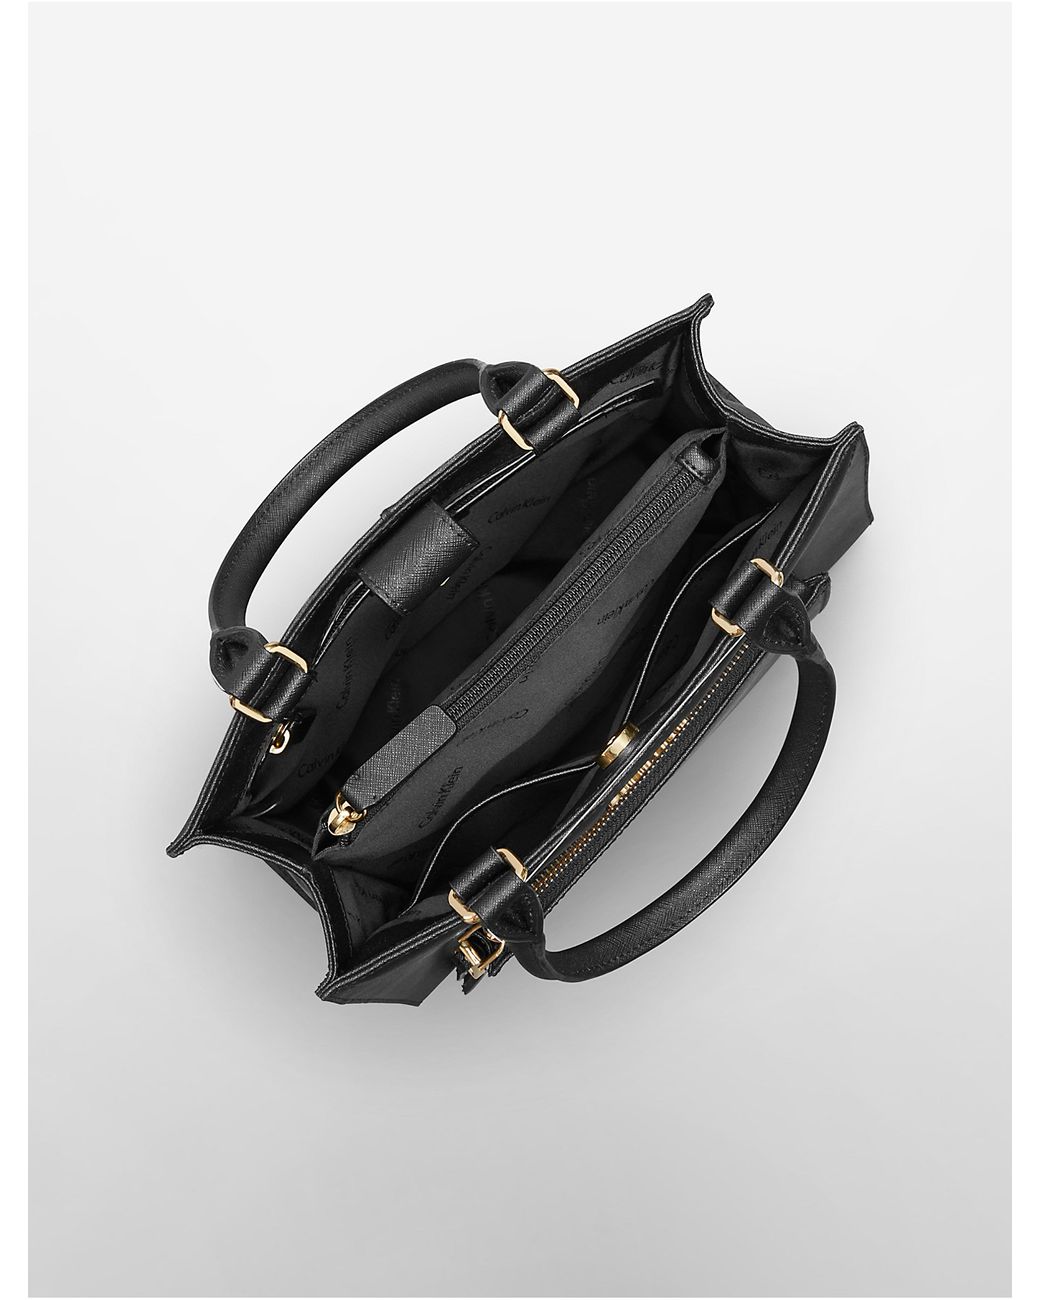 Descubrir 56+ imagen calvin klein black leather handbag